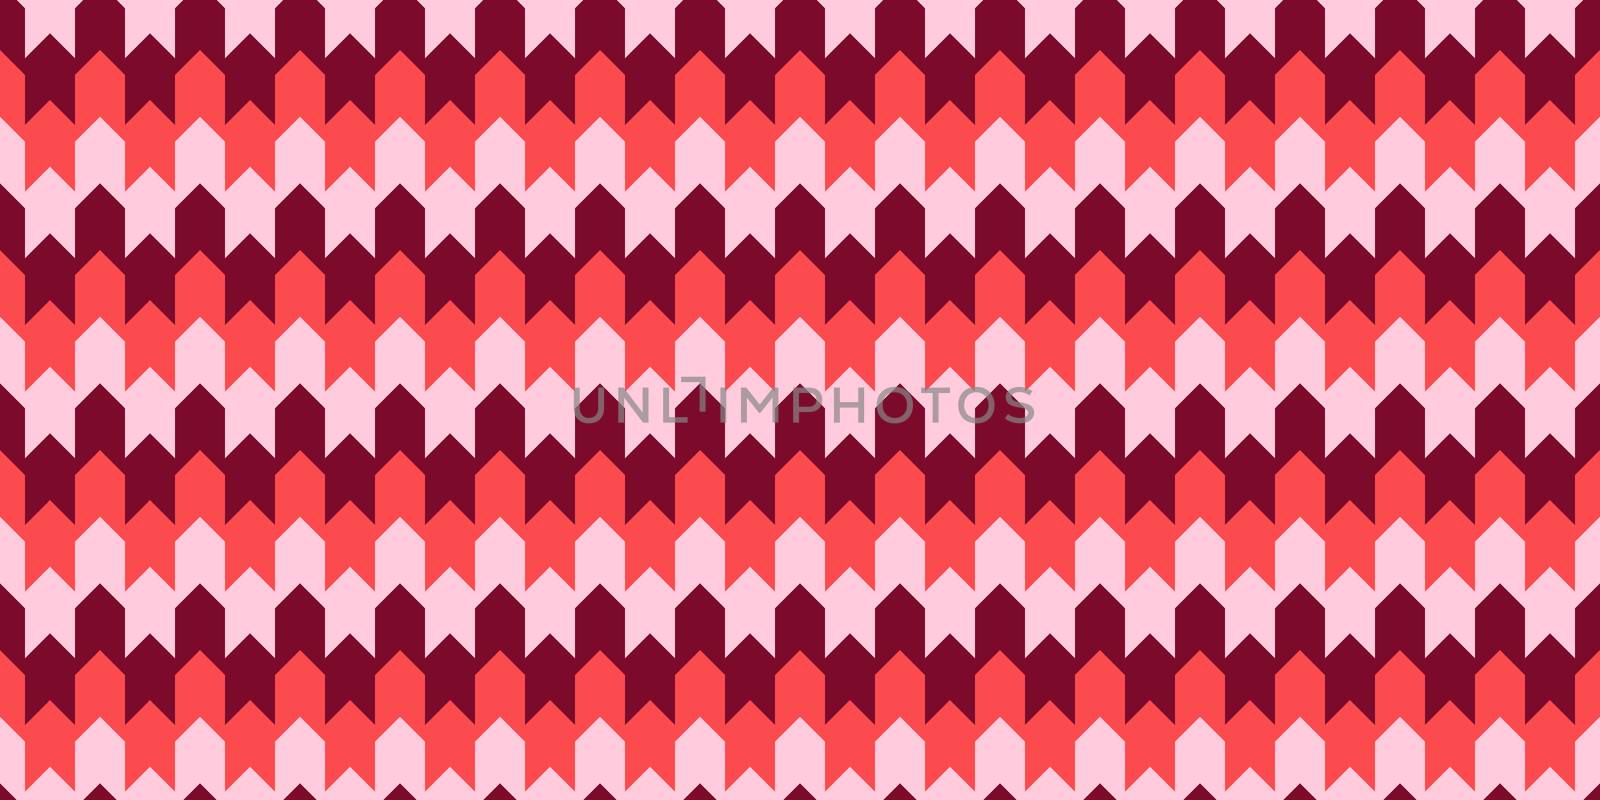 Red Scarlet Chevron Geometry Background. Seamless Zigzag Texture. Modern Striped Pattern.